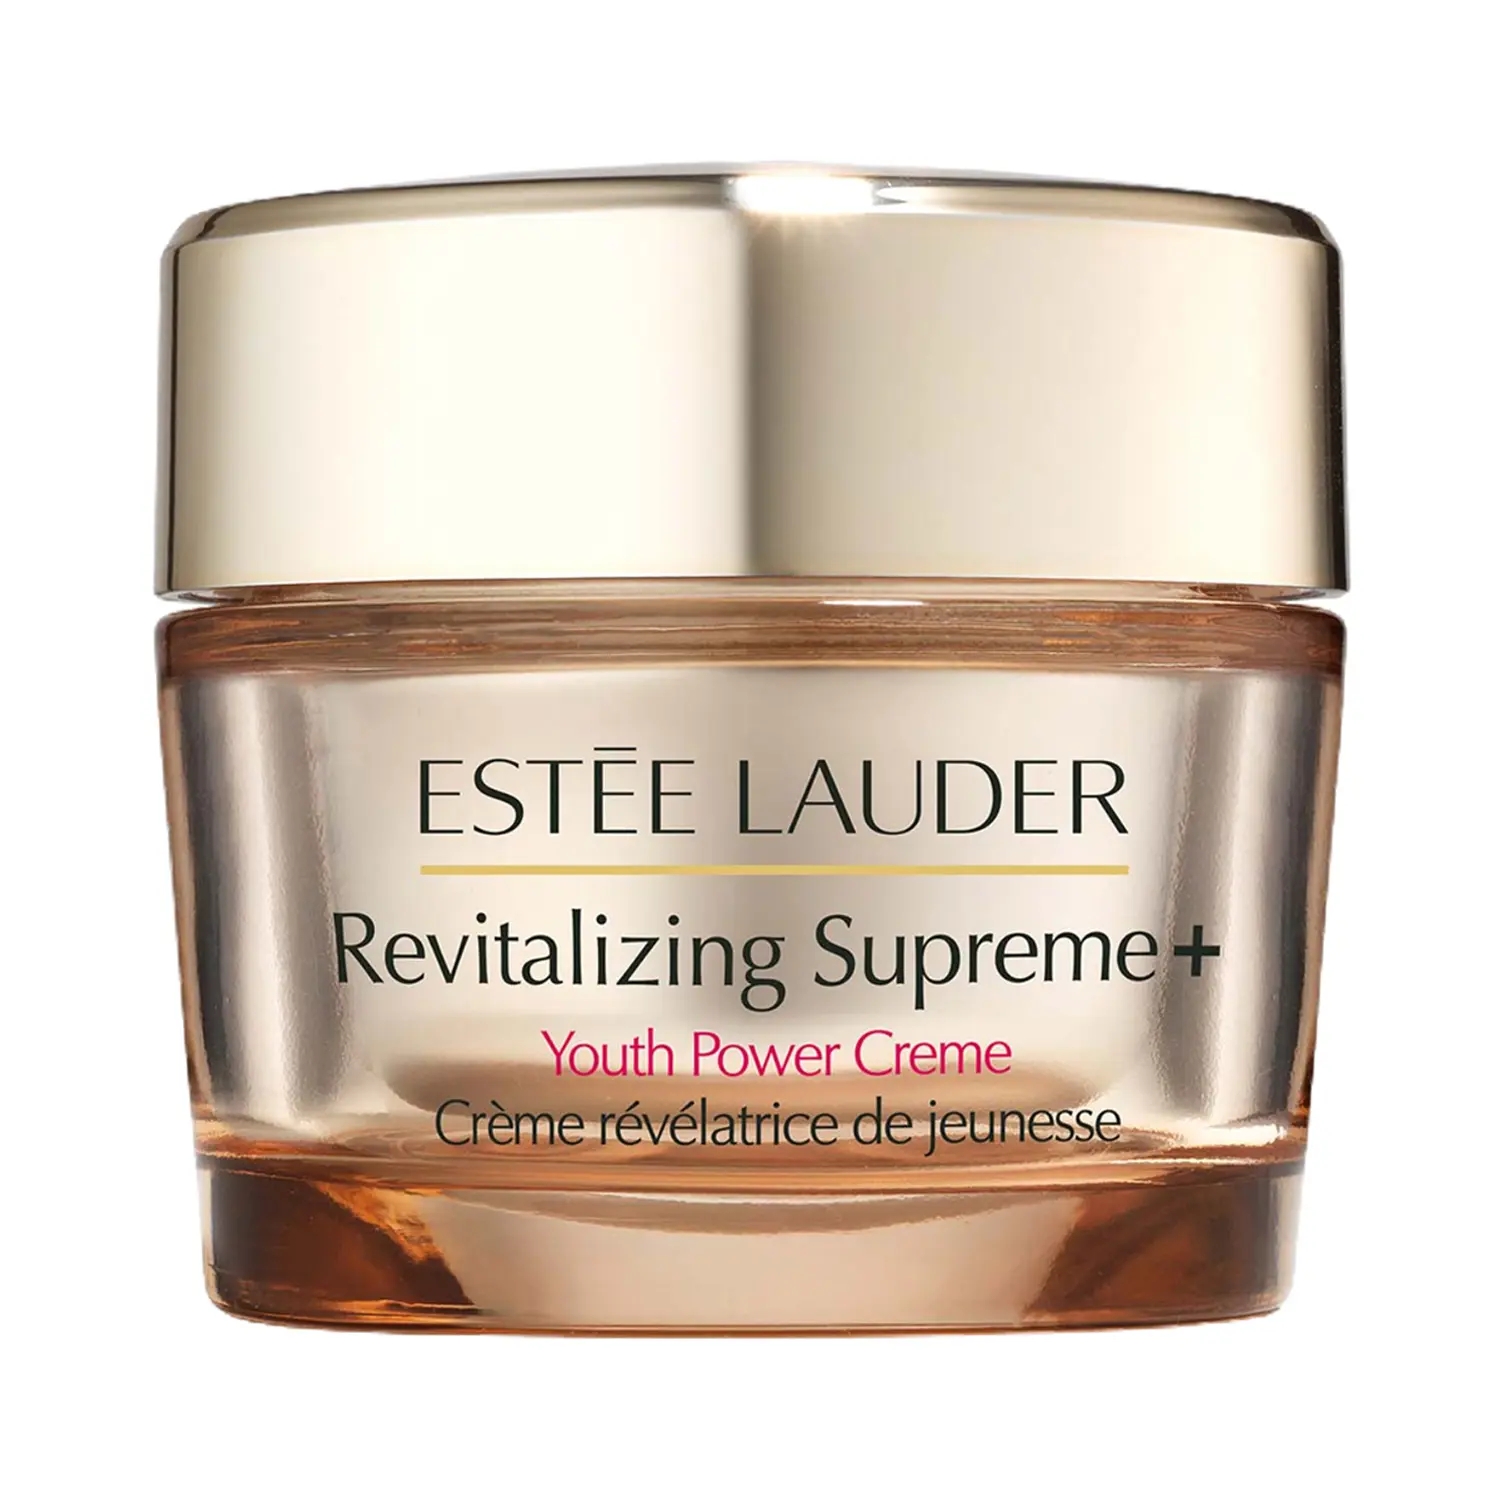 Estee Lauder | Estee Lauder Revitalizing Supreme+ Youth Power Creme (15ml)